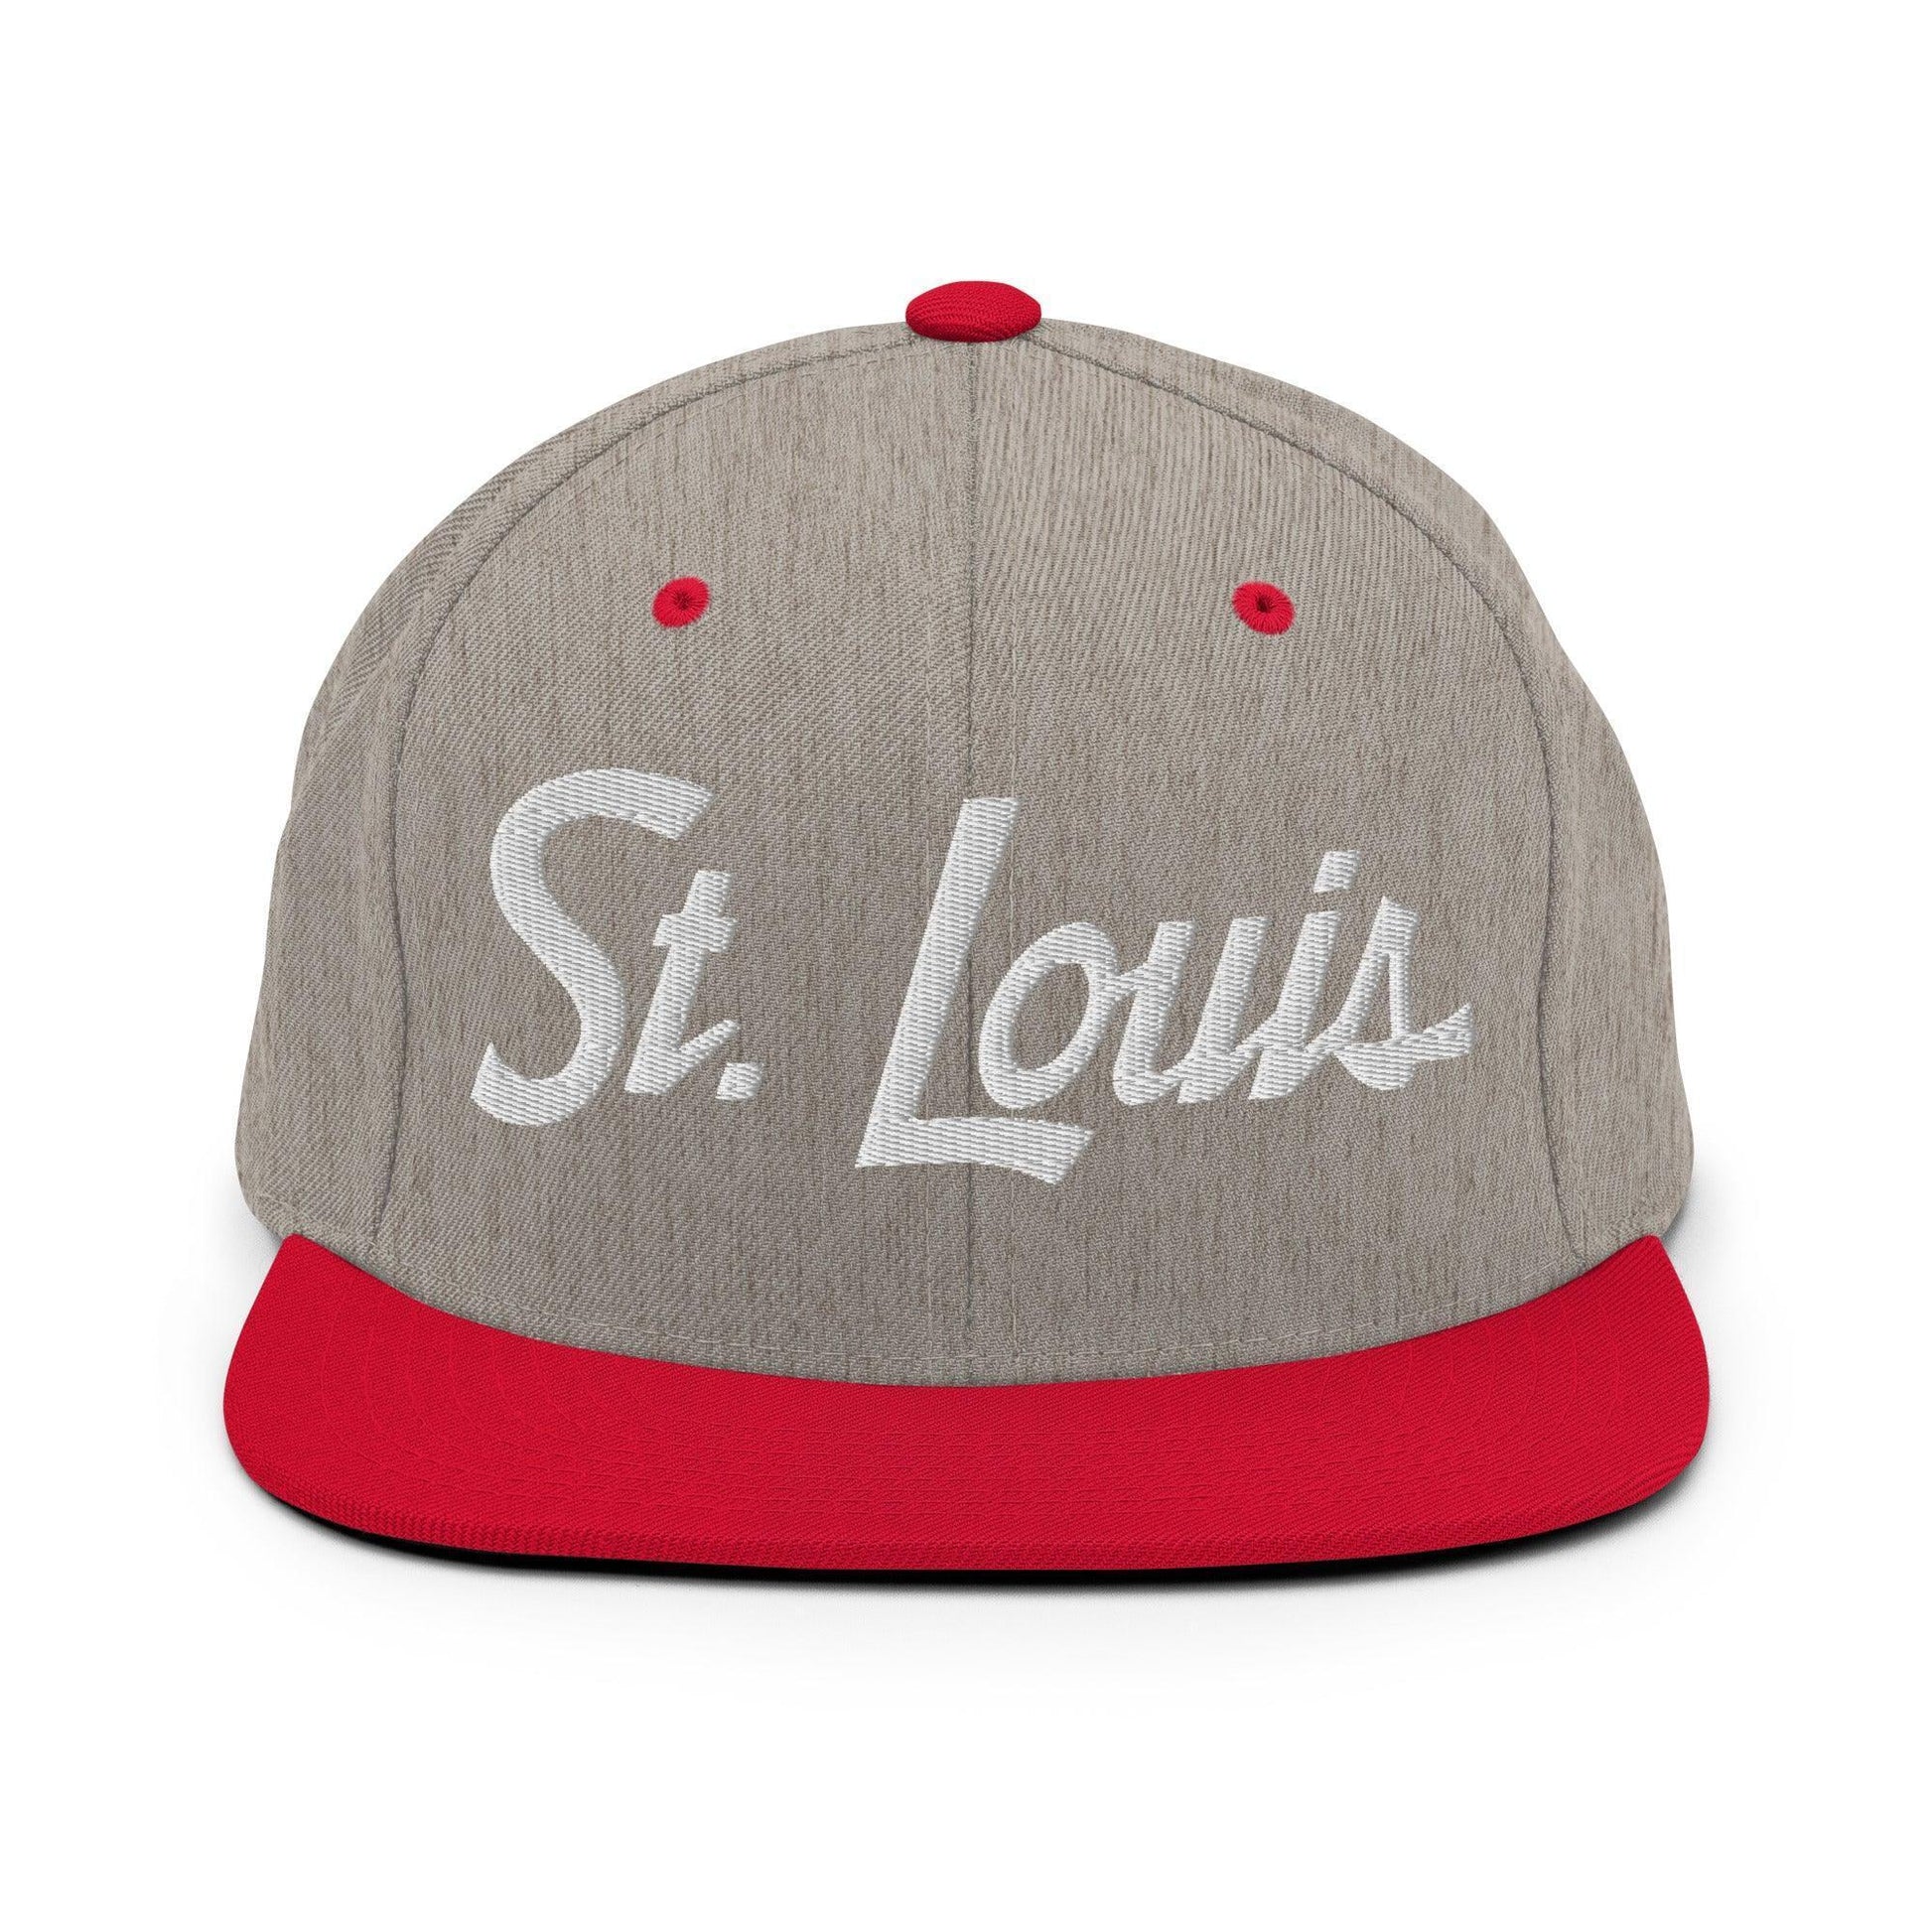 St. Louis Script Snapback Hat Heather Grey/ Red